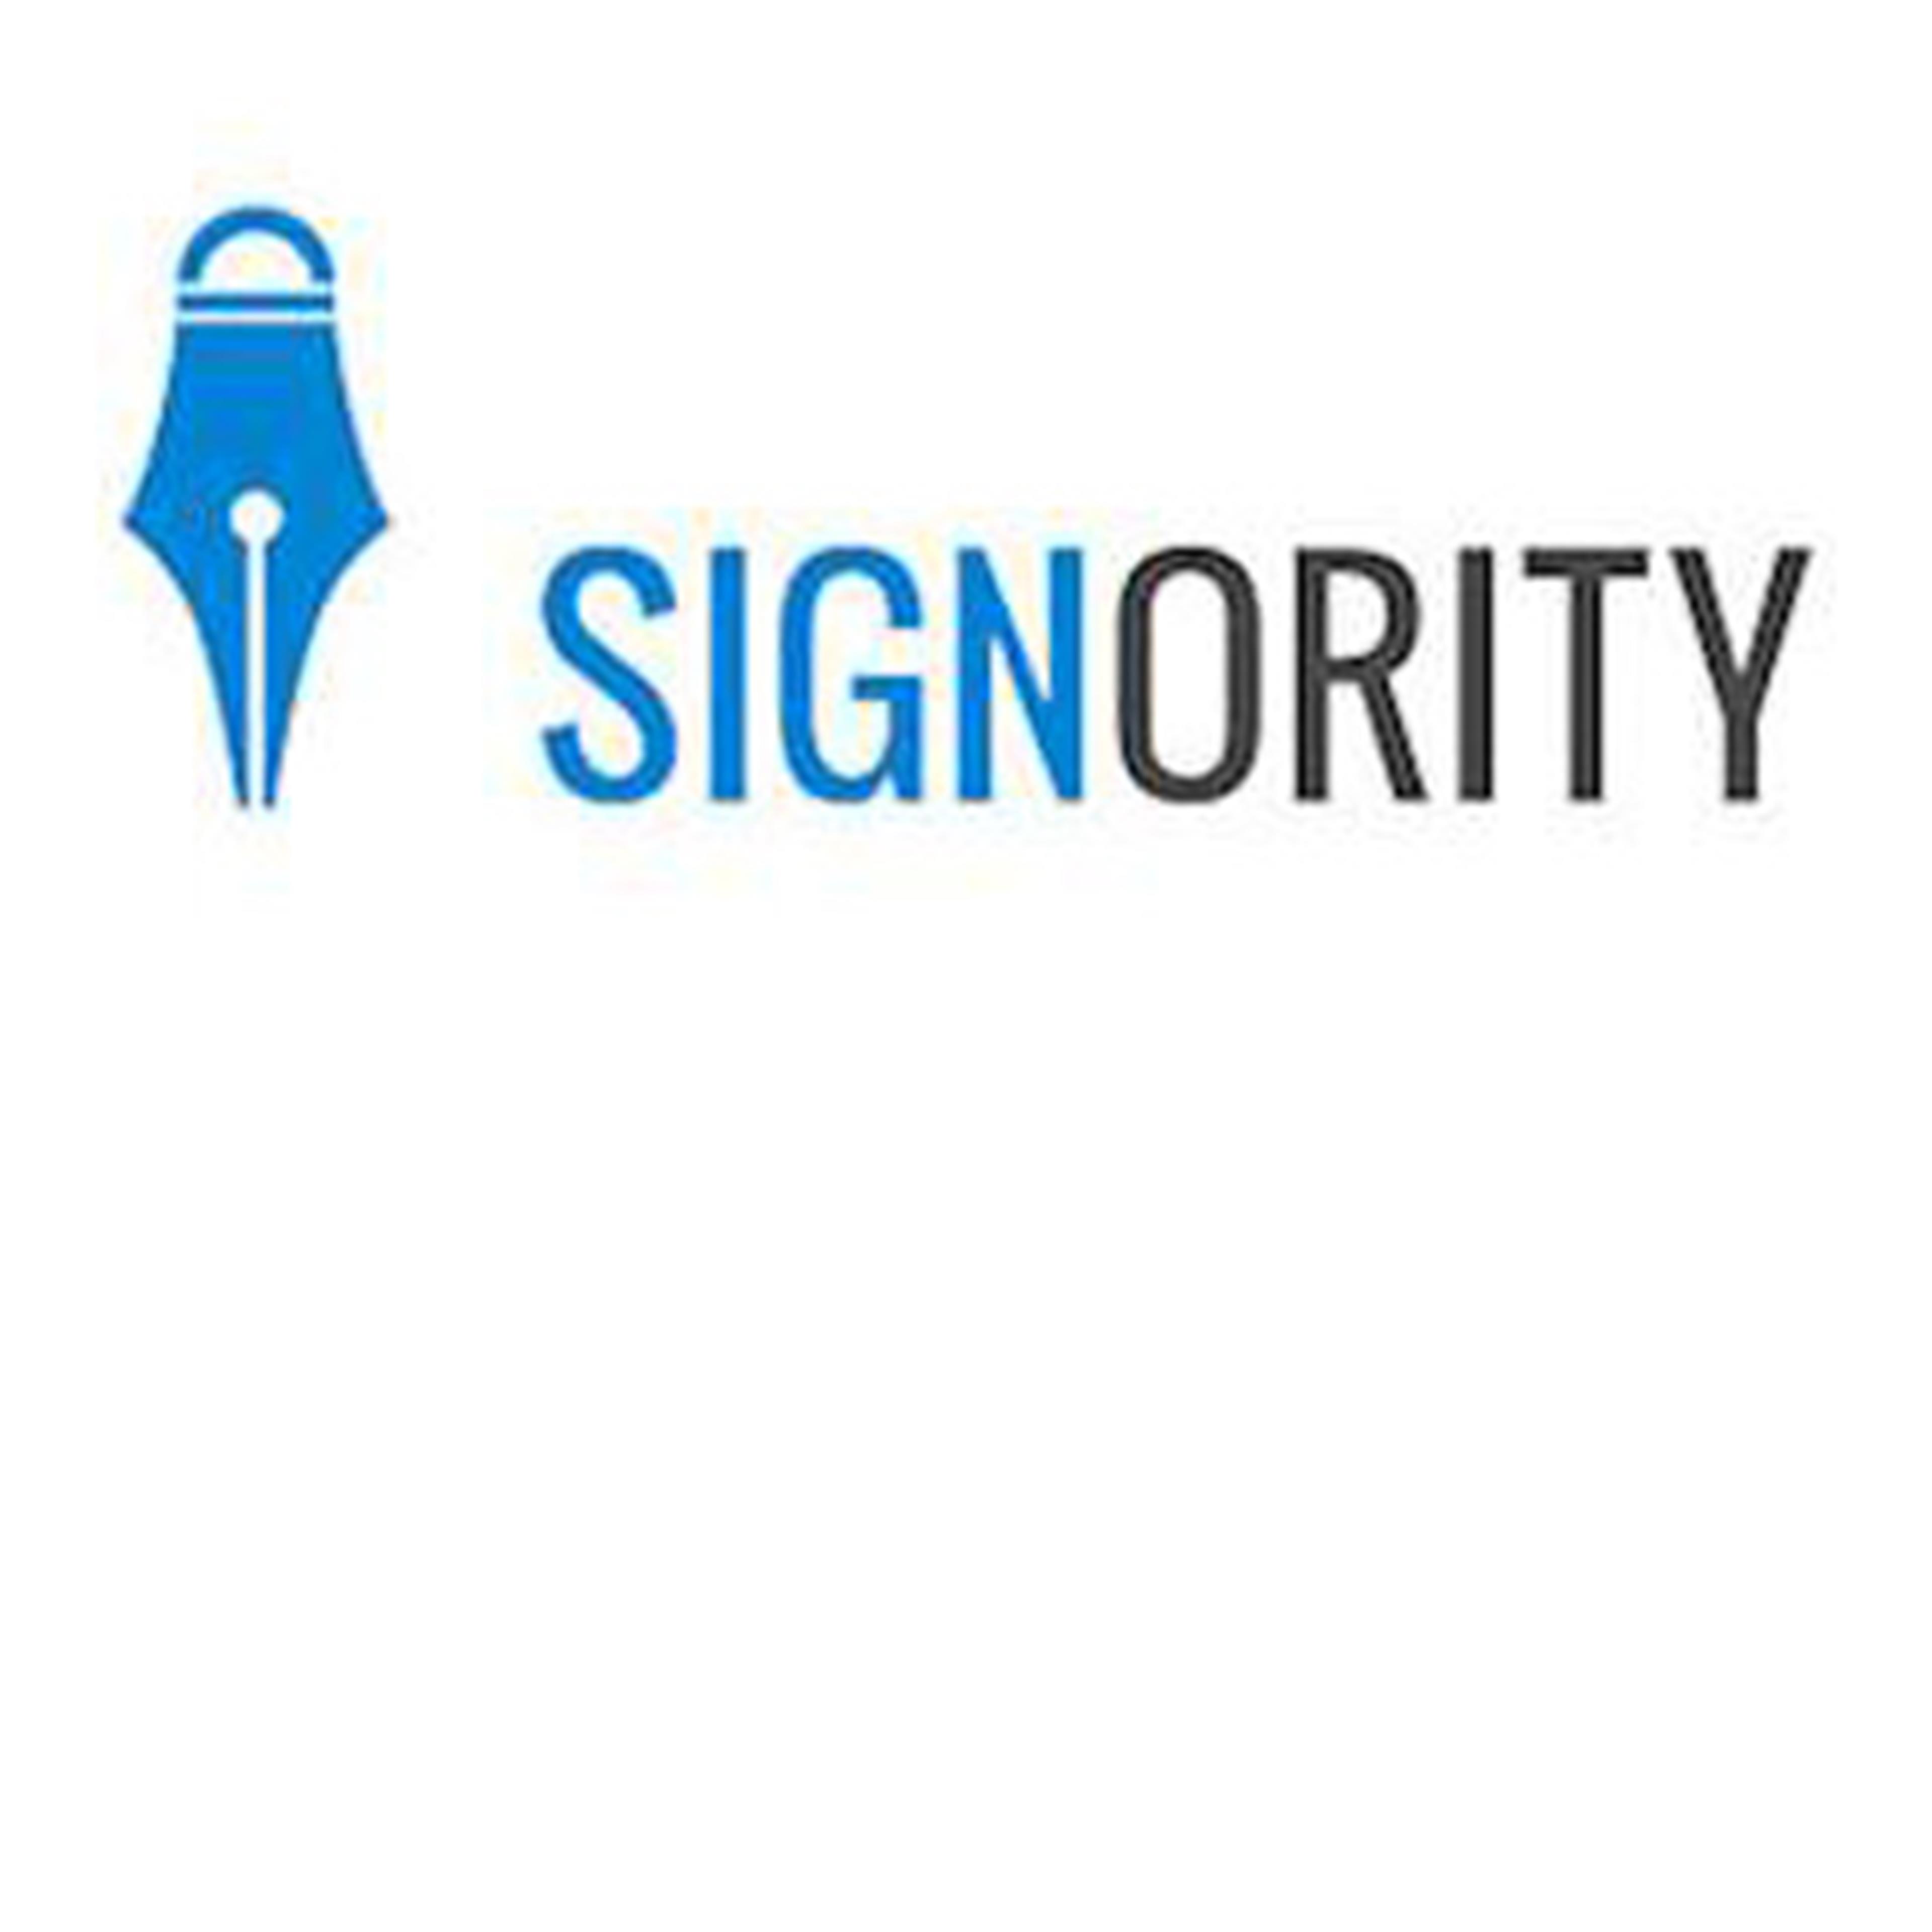 Signority logo